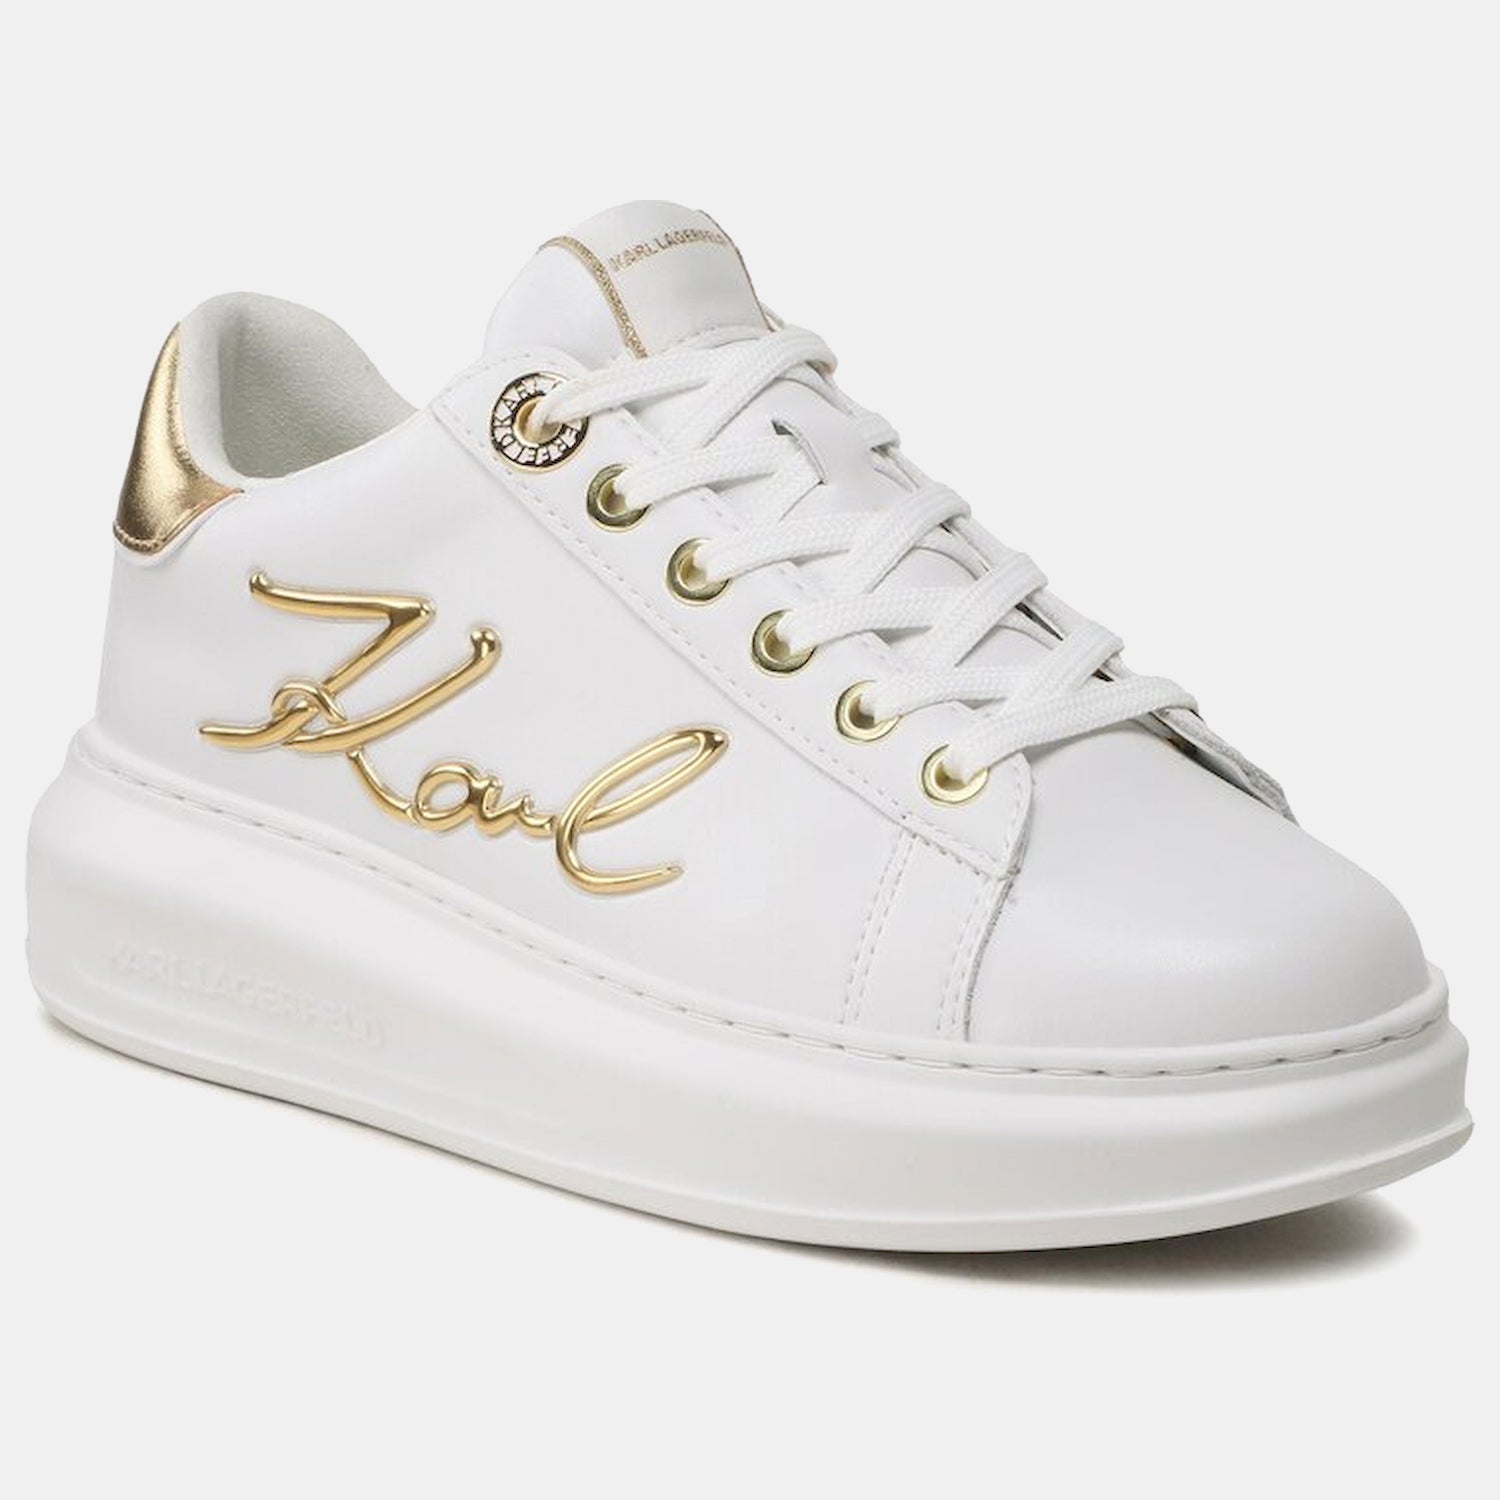 Karl Lagerfeld Sapatilhas Sneakers Shoes Kl62510a Whi Gold Branco Dourado_shot5